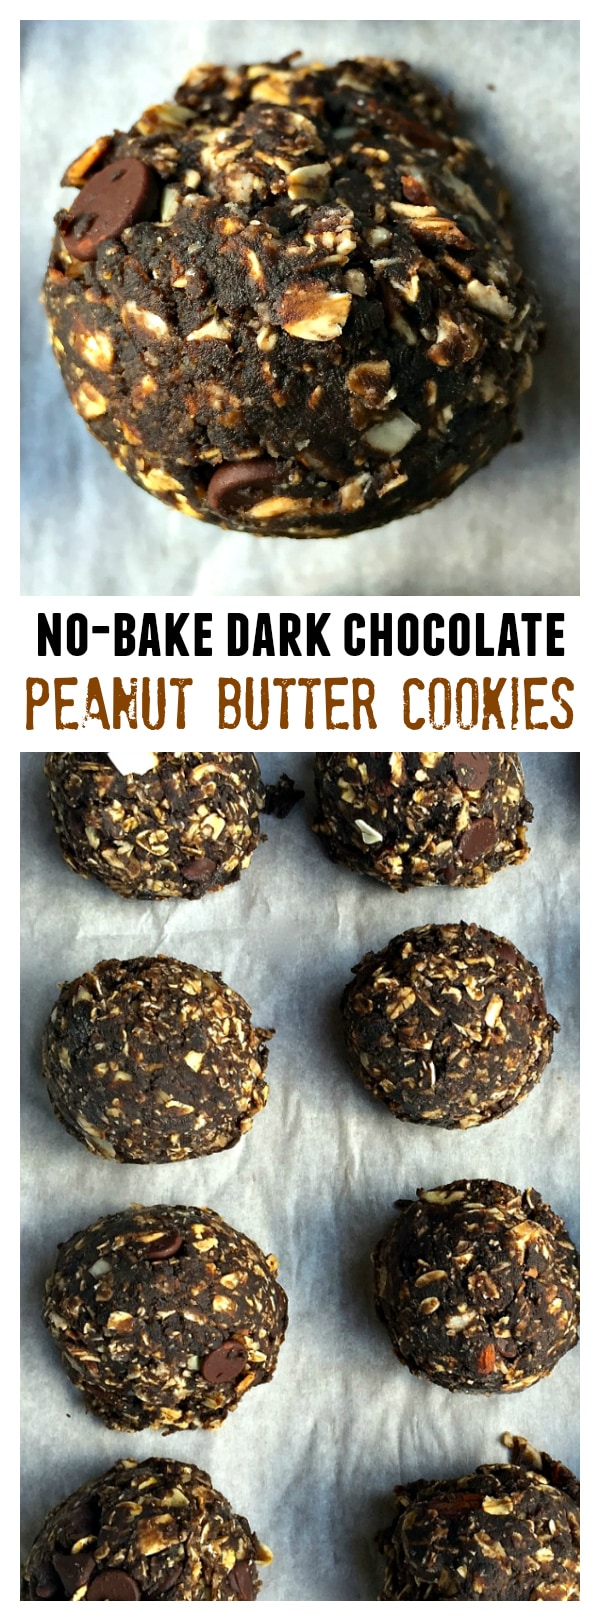 No-Bake Dark Chocolate Peanut Butter Cookies